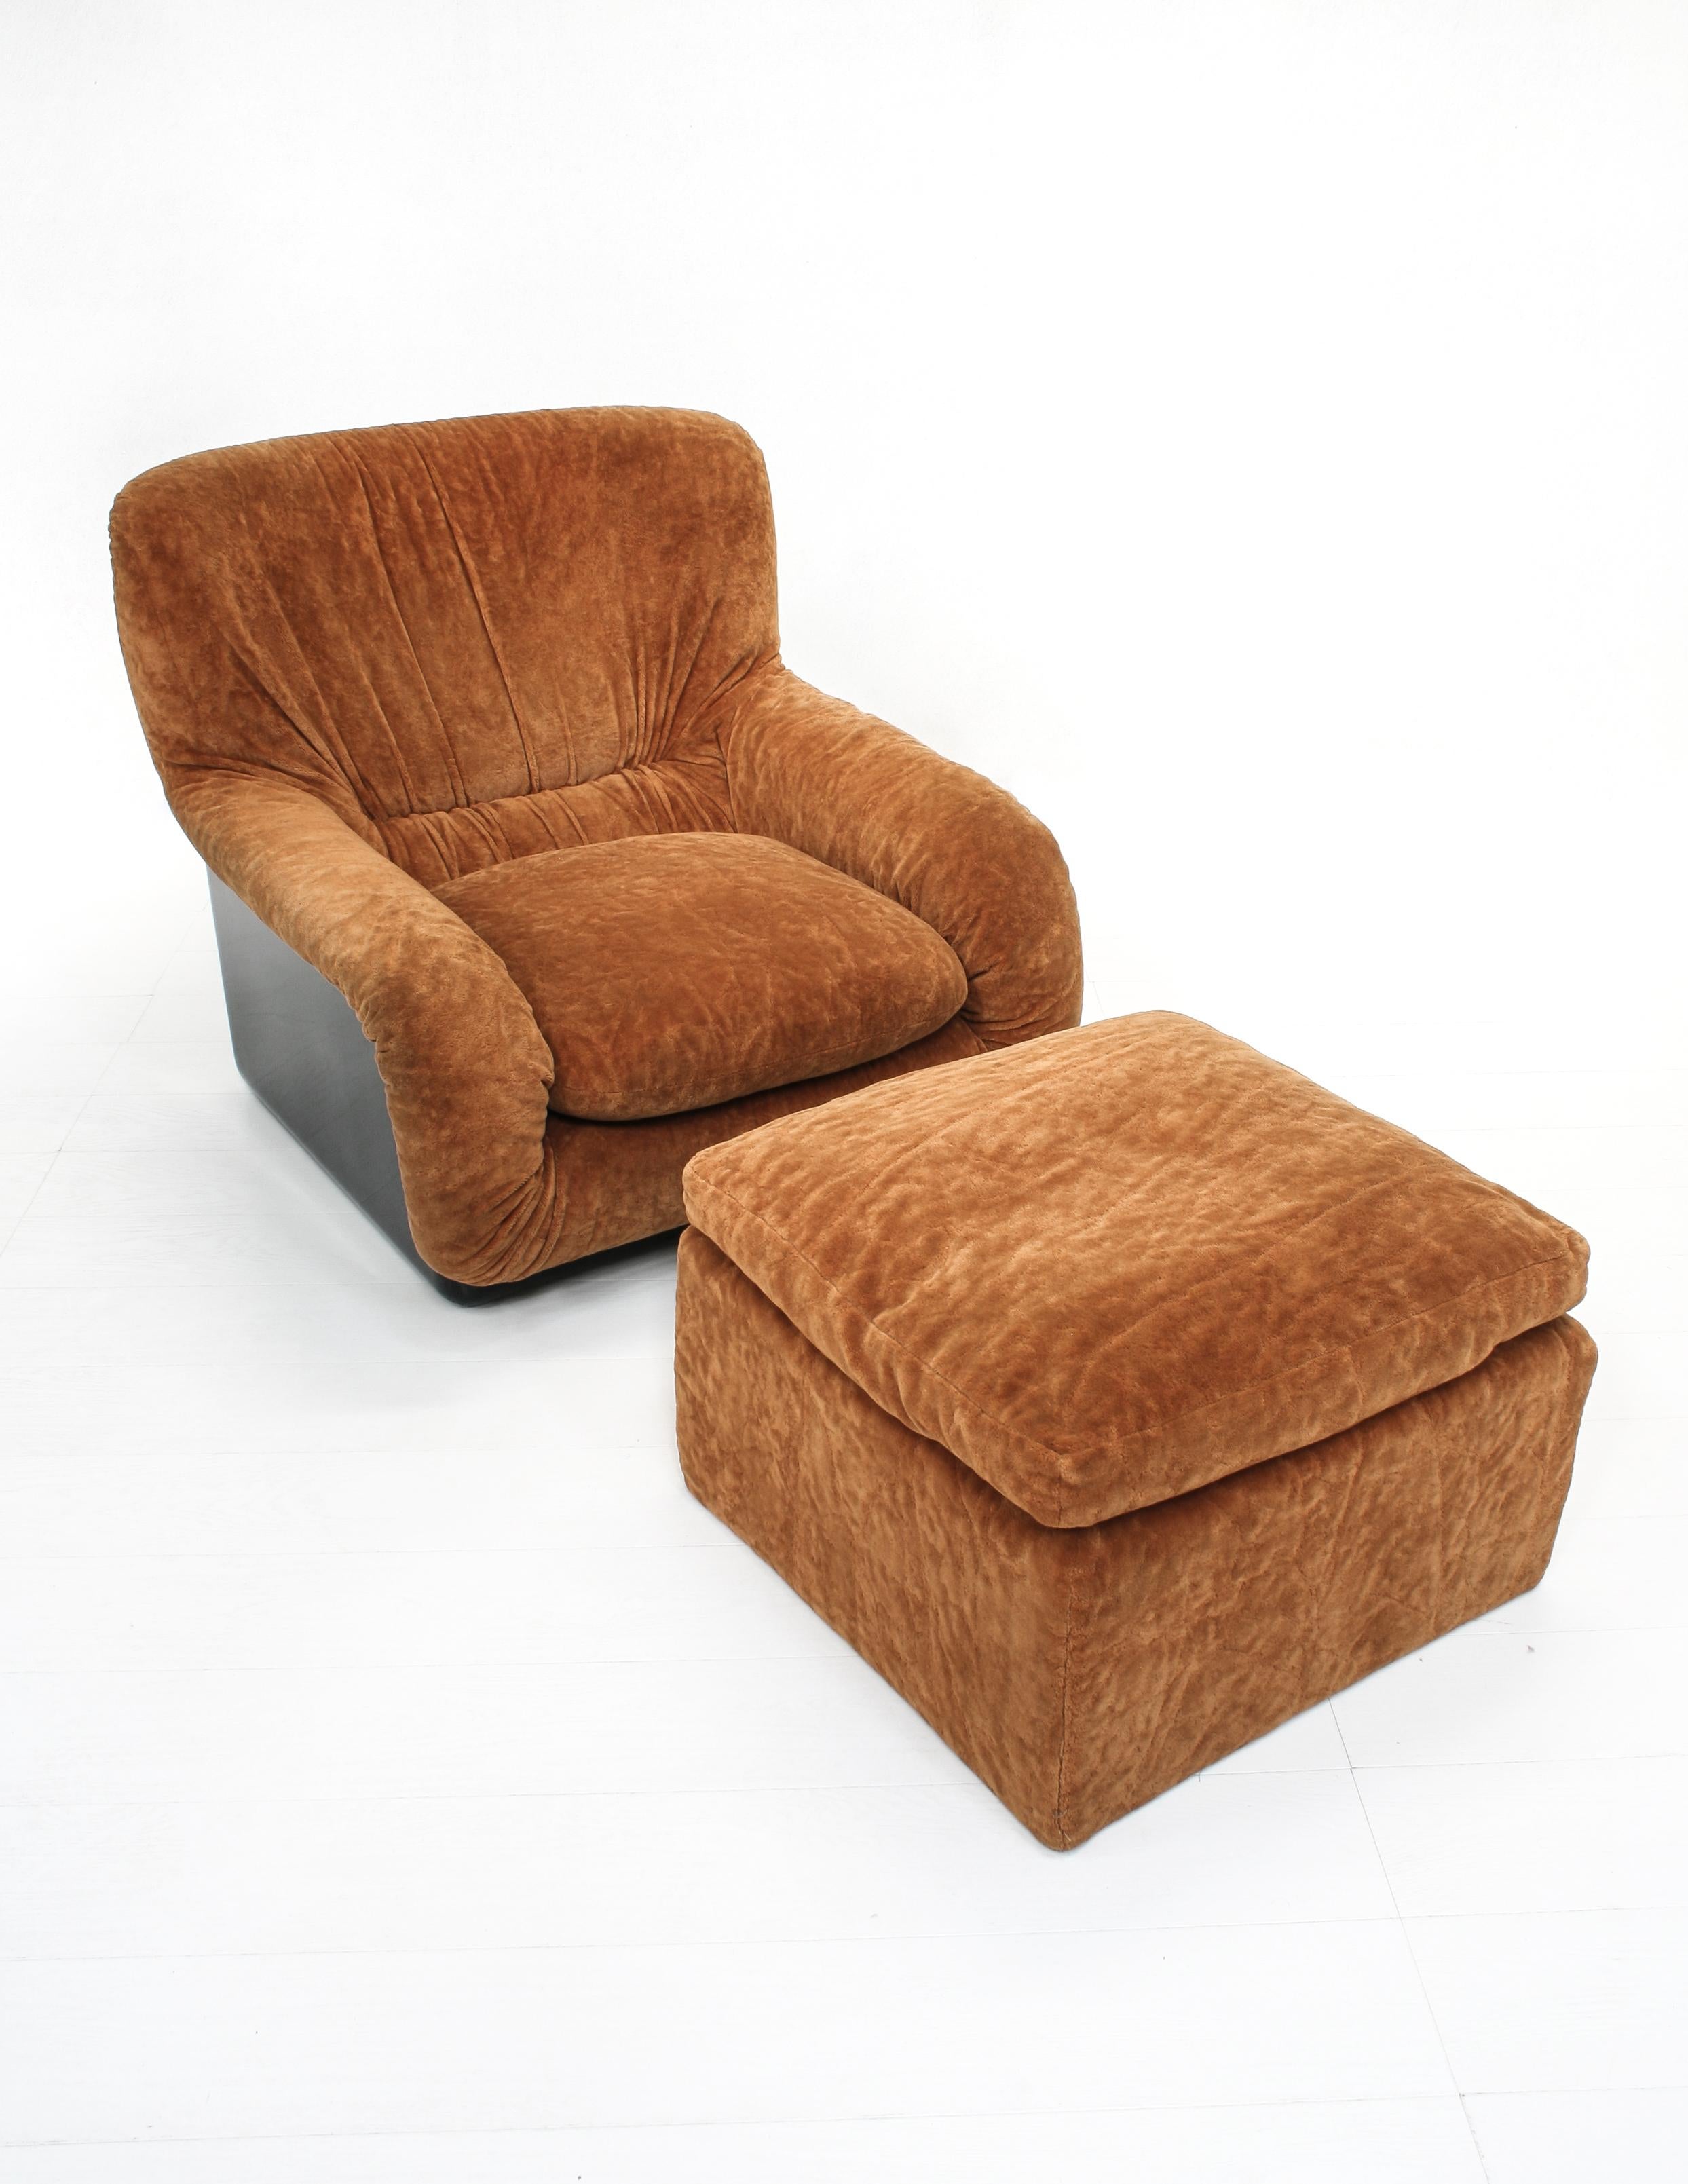 Space Age Papaia Lounge Chairs and Ottoman by Ammannati & Vitelli for Rossi di Albizzate